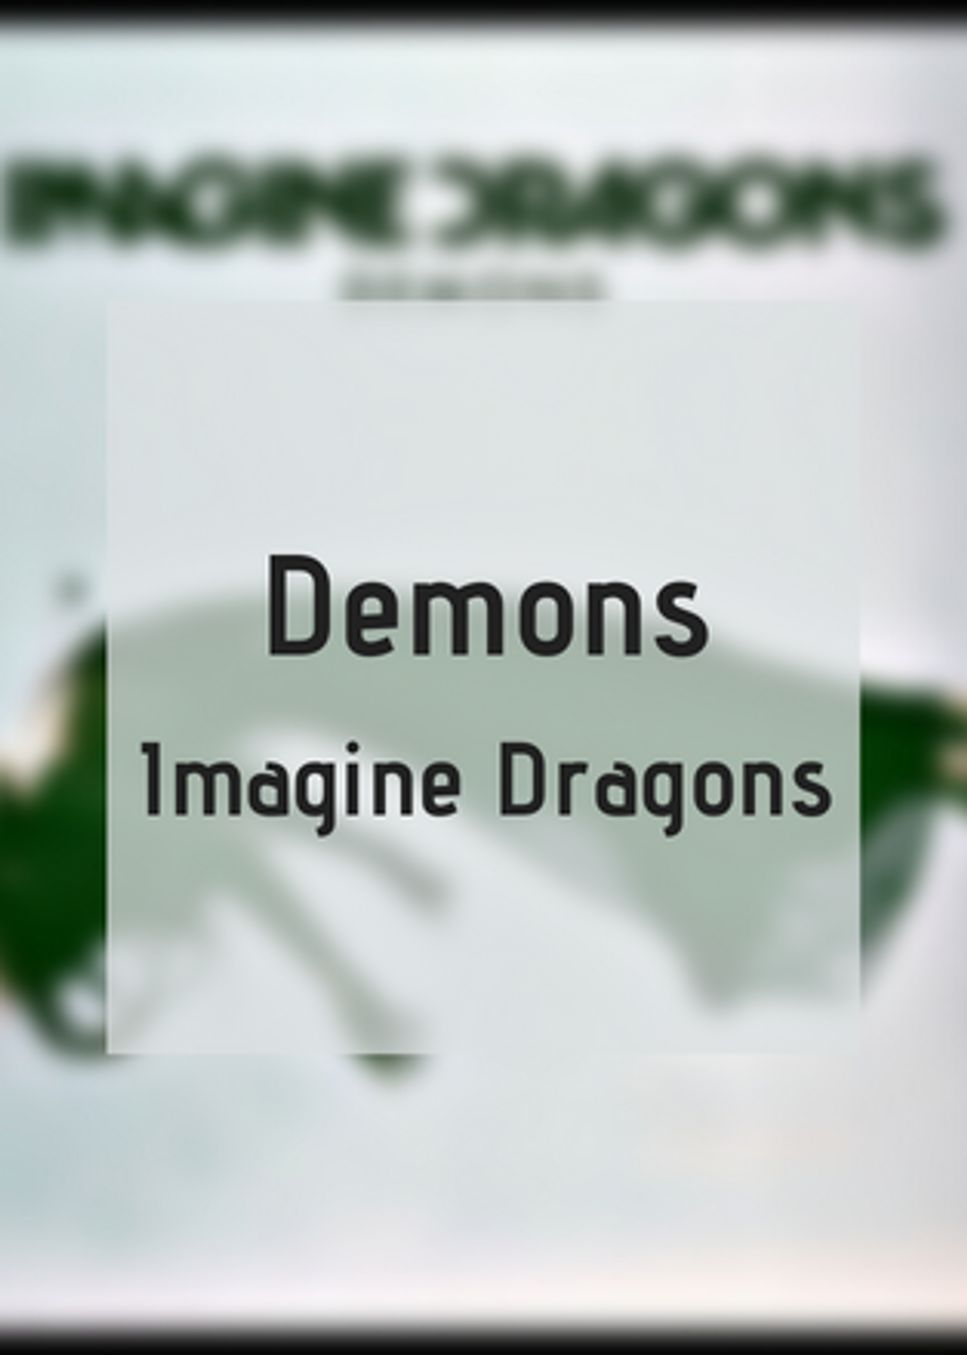 Imagine Dragons - Demons Sheets by GuestinPiano